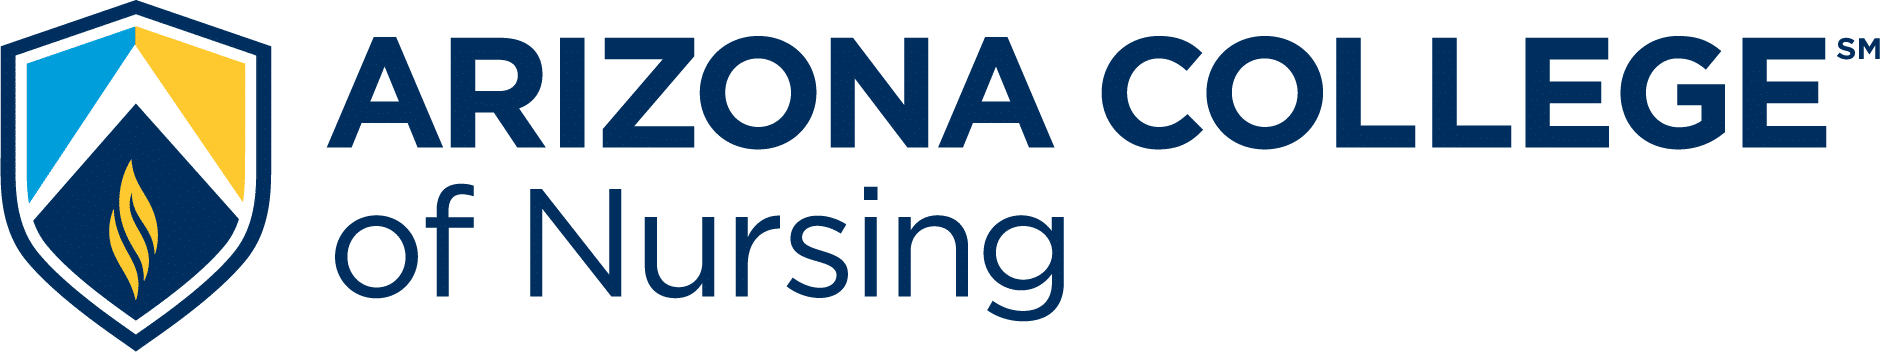 bsn-program-arizona-college-of-nursing